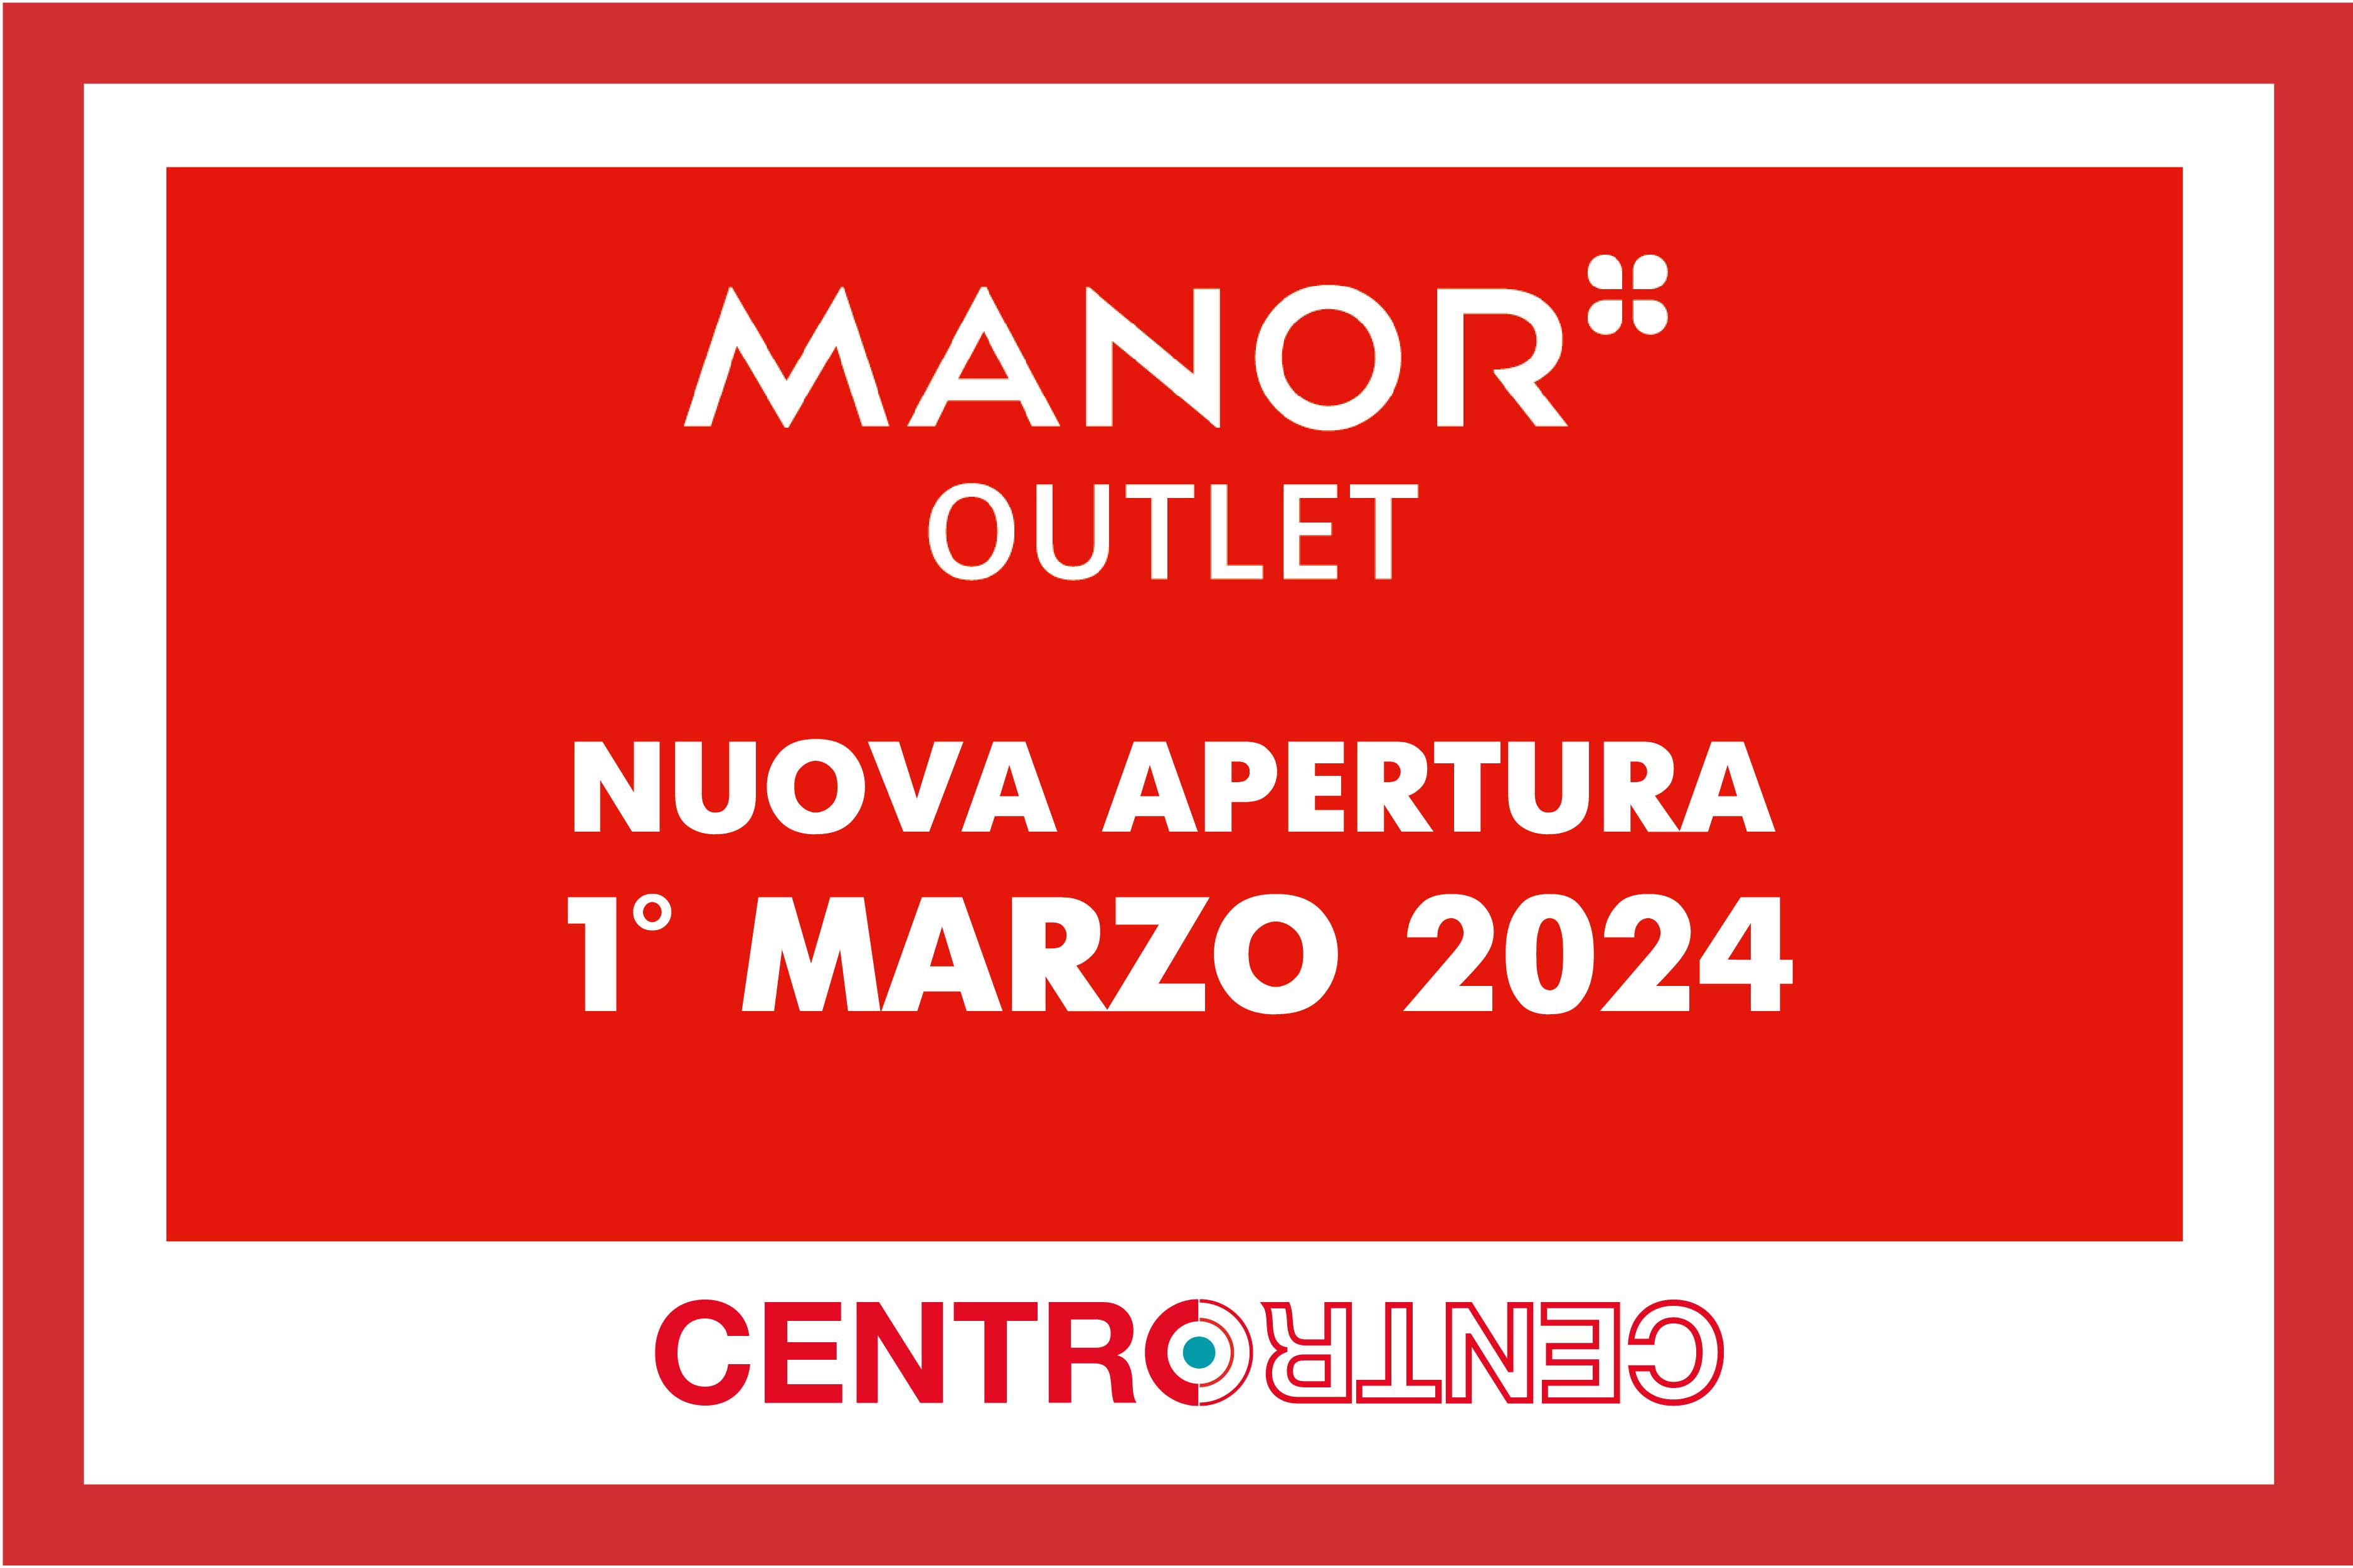 MANOR Outlet prossima apertura 1° marzo 2024